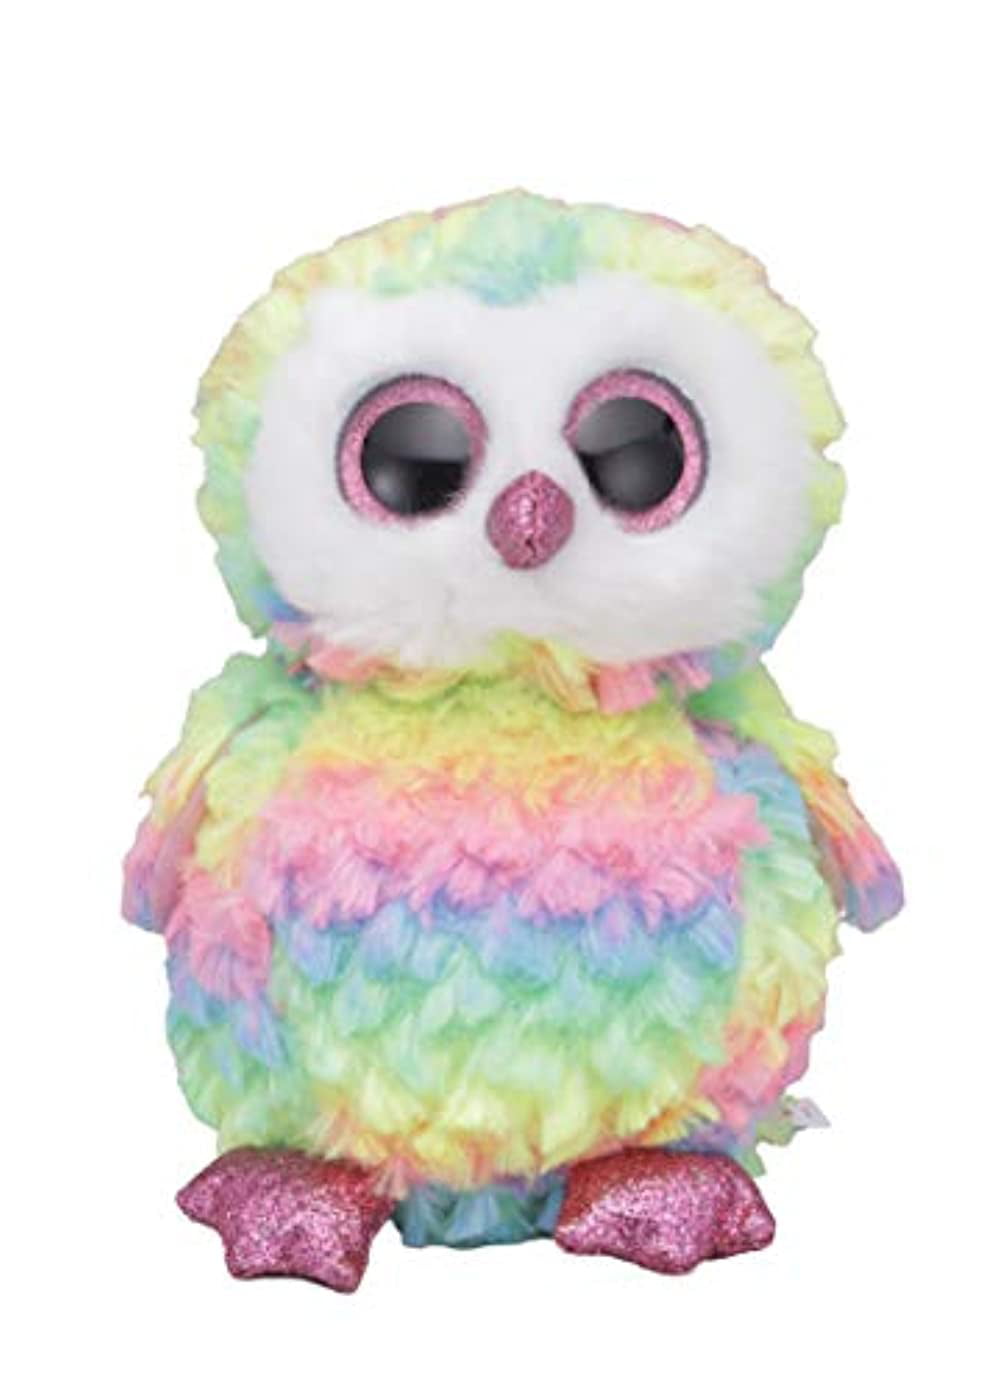 Ty Beanie Boos 6" Owen the Rainbow Owl Stuffed Animal Plush NWMT's w/ Heart Tags 